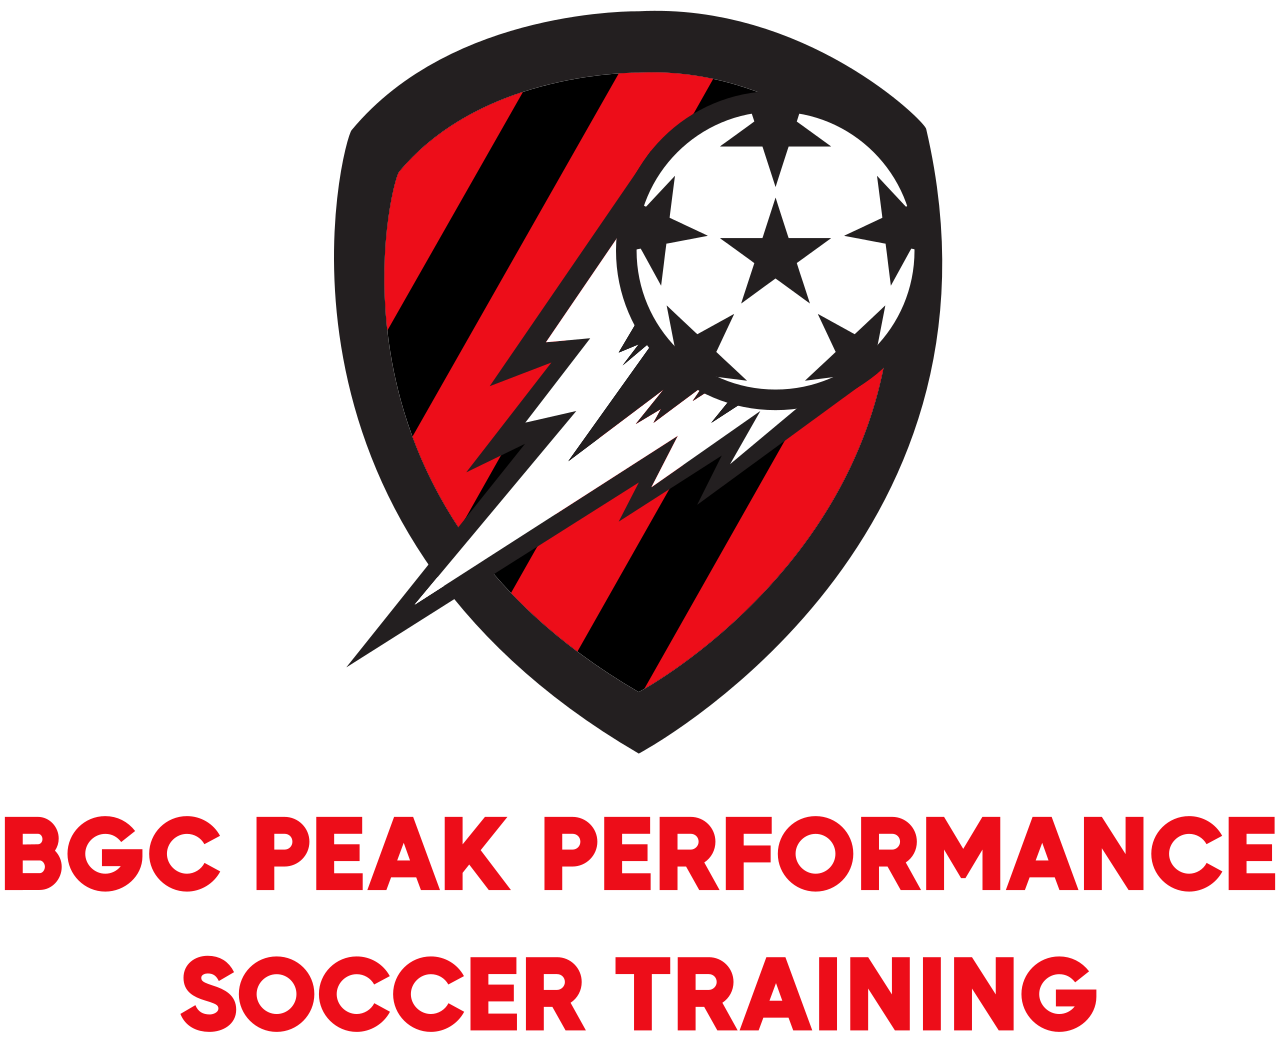 BGC Peak Performance
Soccer Training's web page